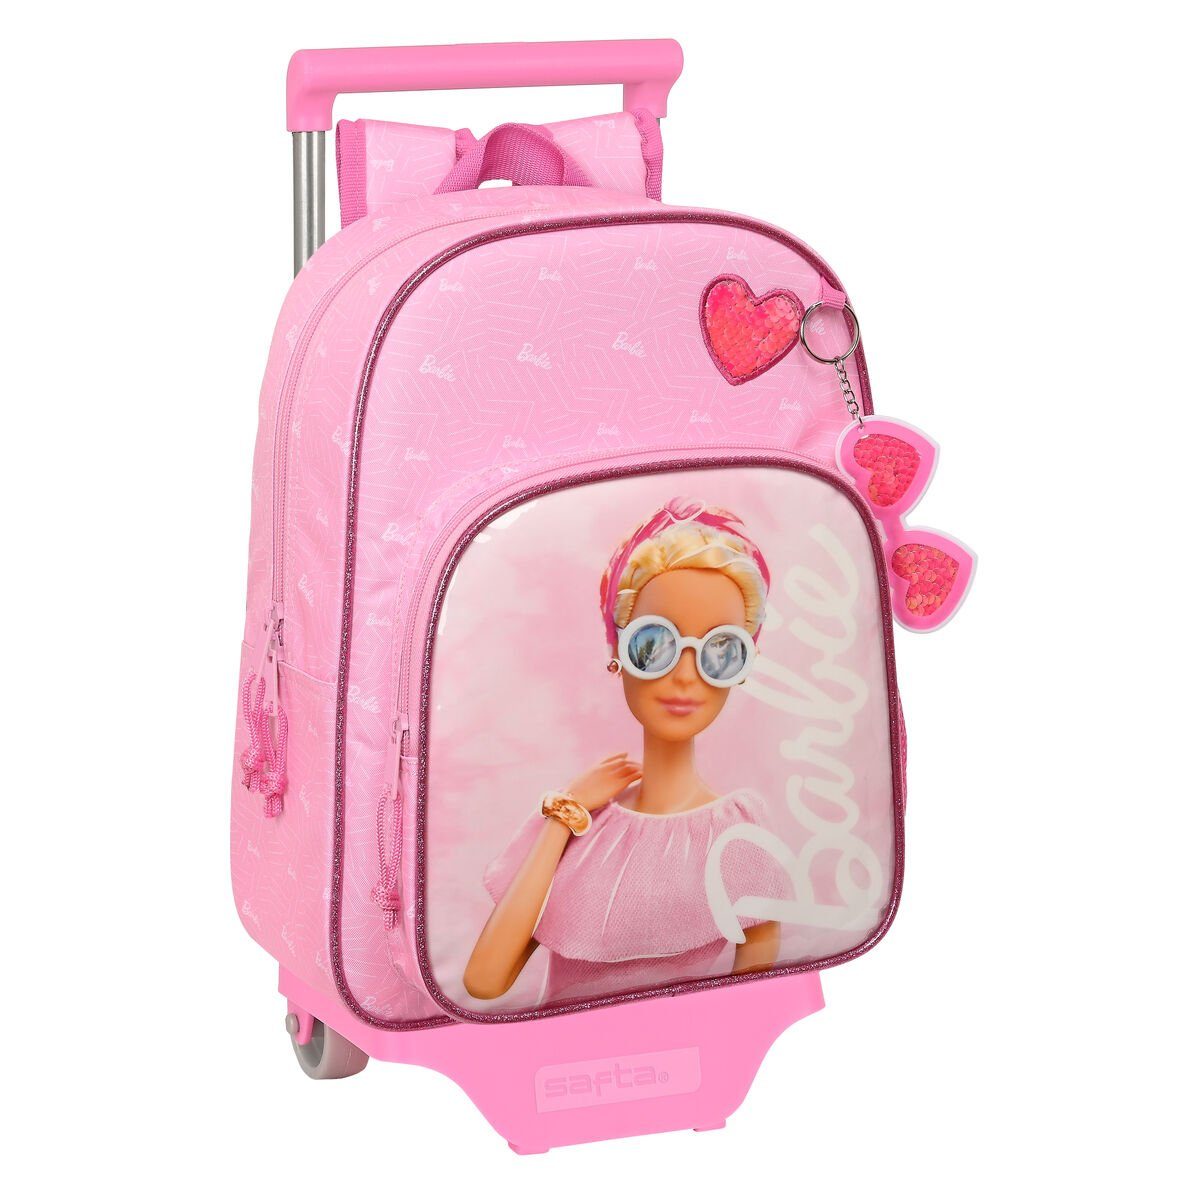 x Barbie 11 Rosa cm Kinder-Rucksack 26 34 Rucksack mit Barbie Girl x Rädern